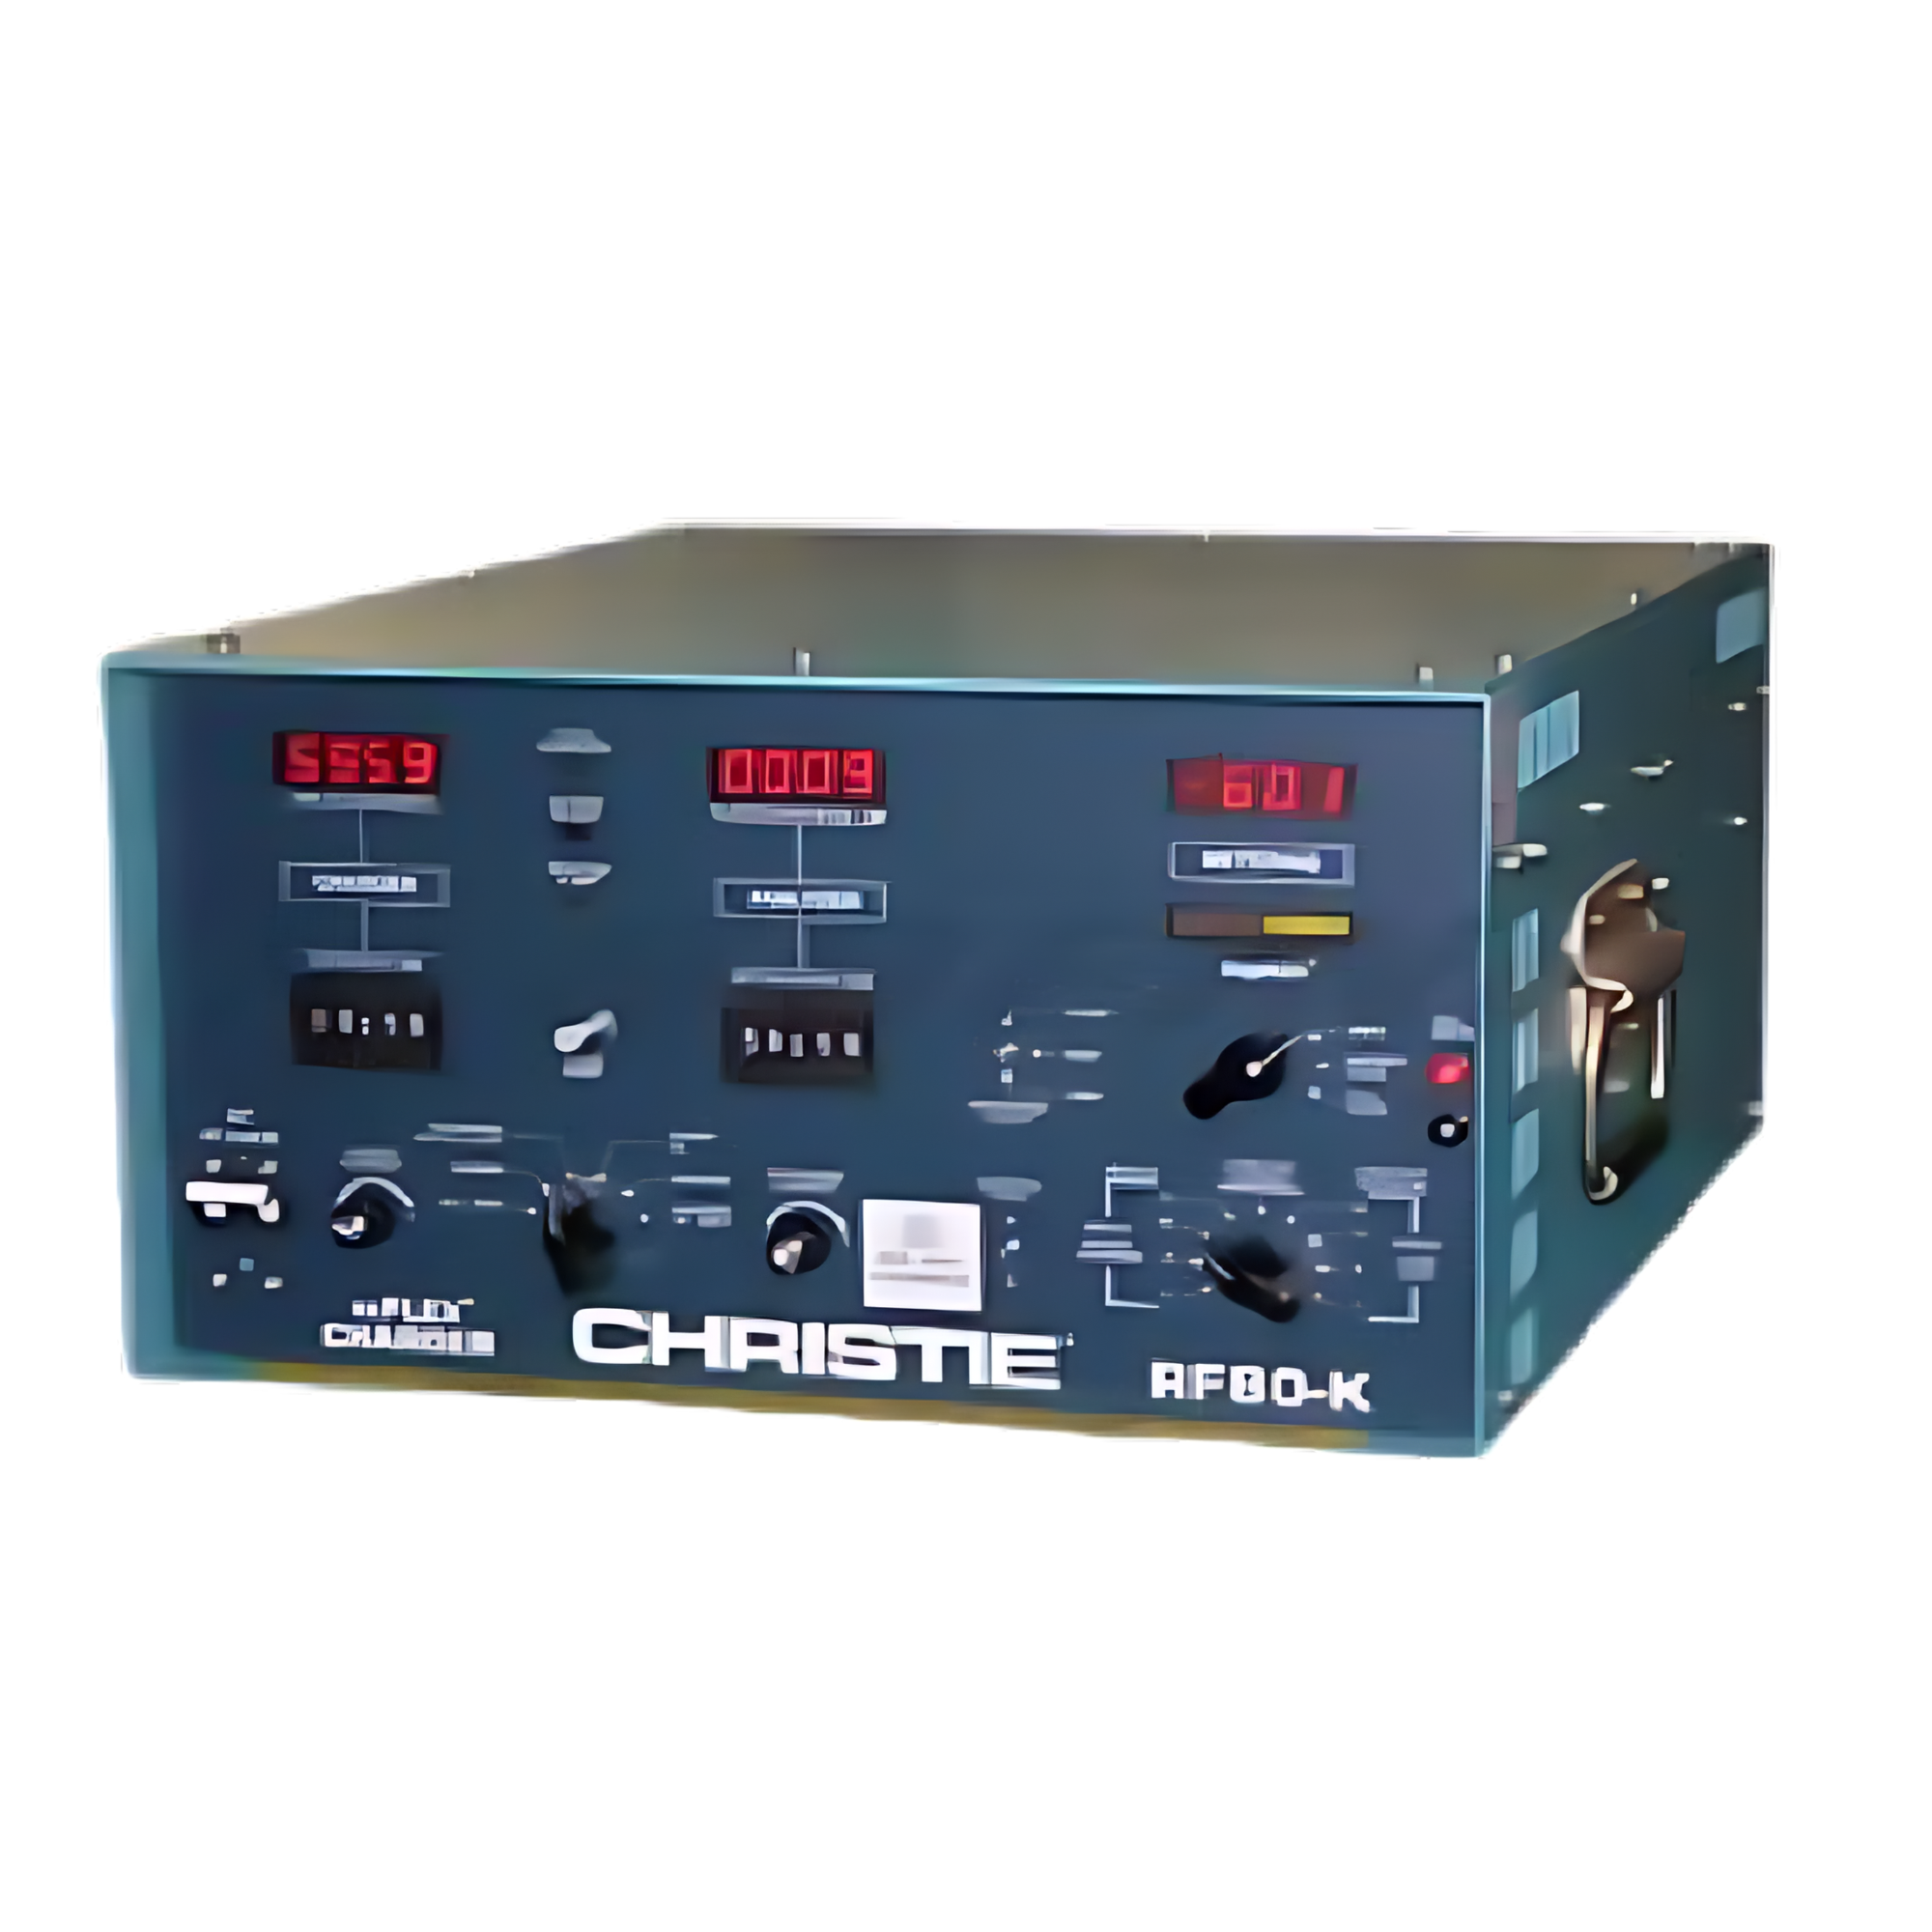 Christie RF80-K (CE) Aircraft Battery Charger/Analyzer PN: 121630-006